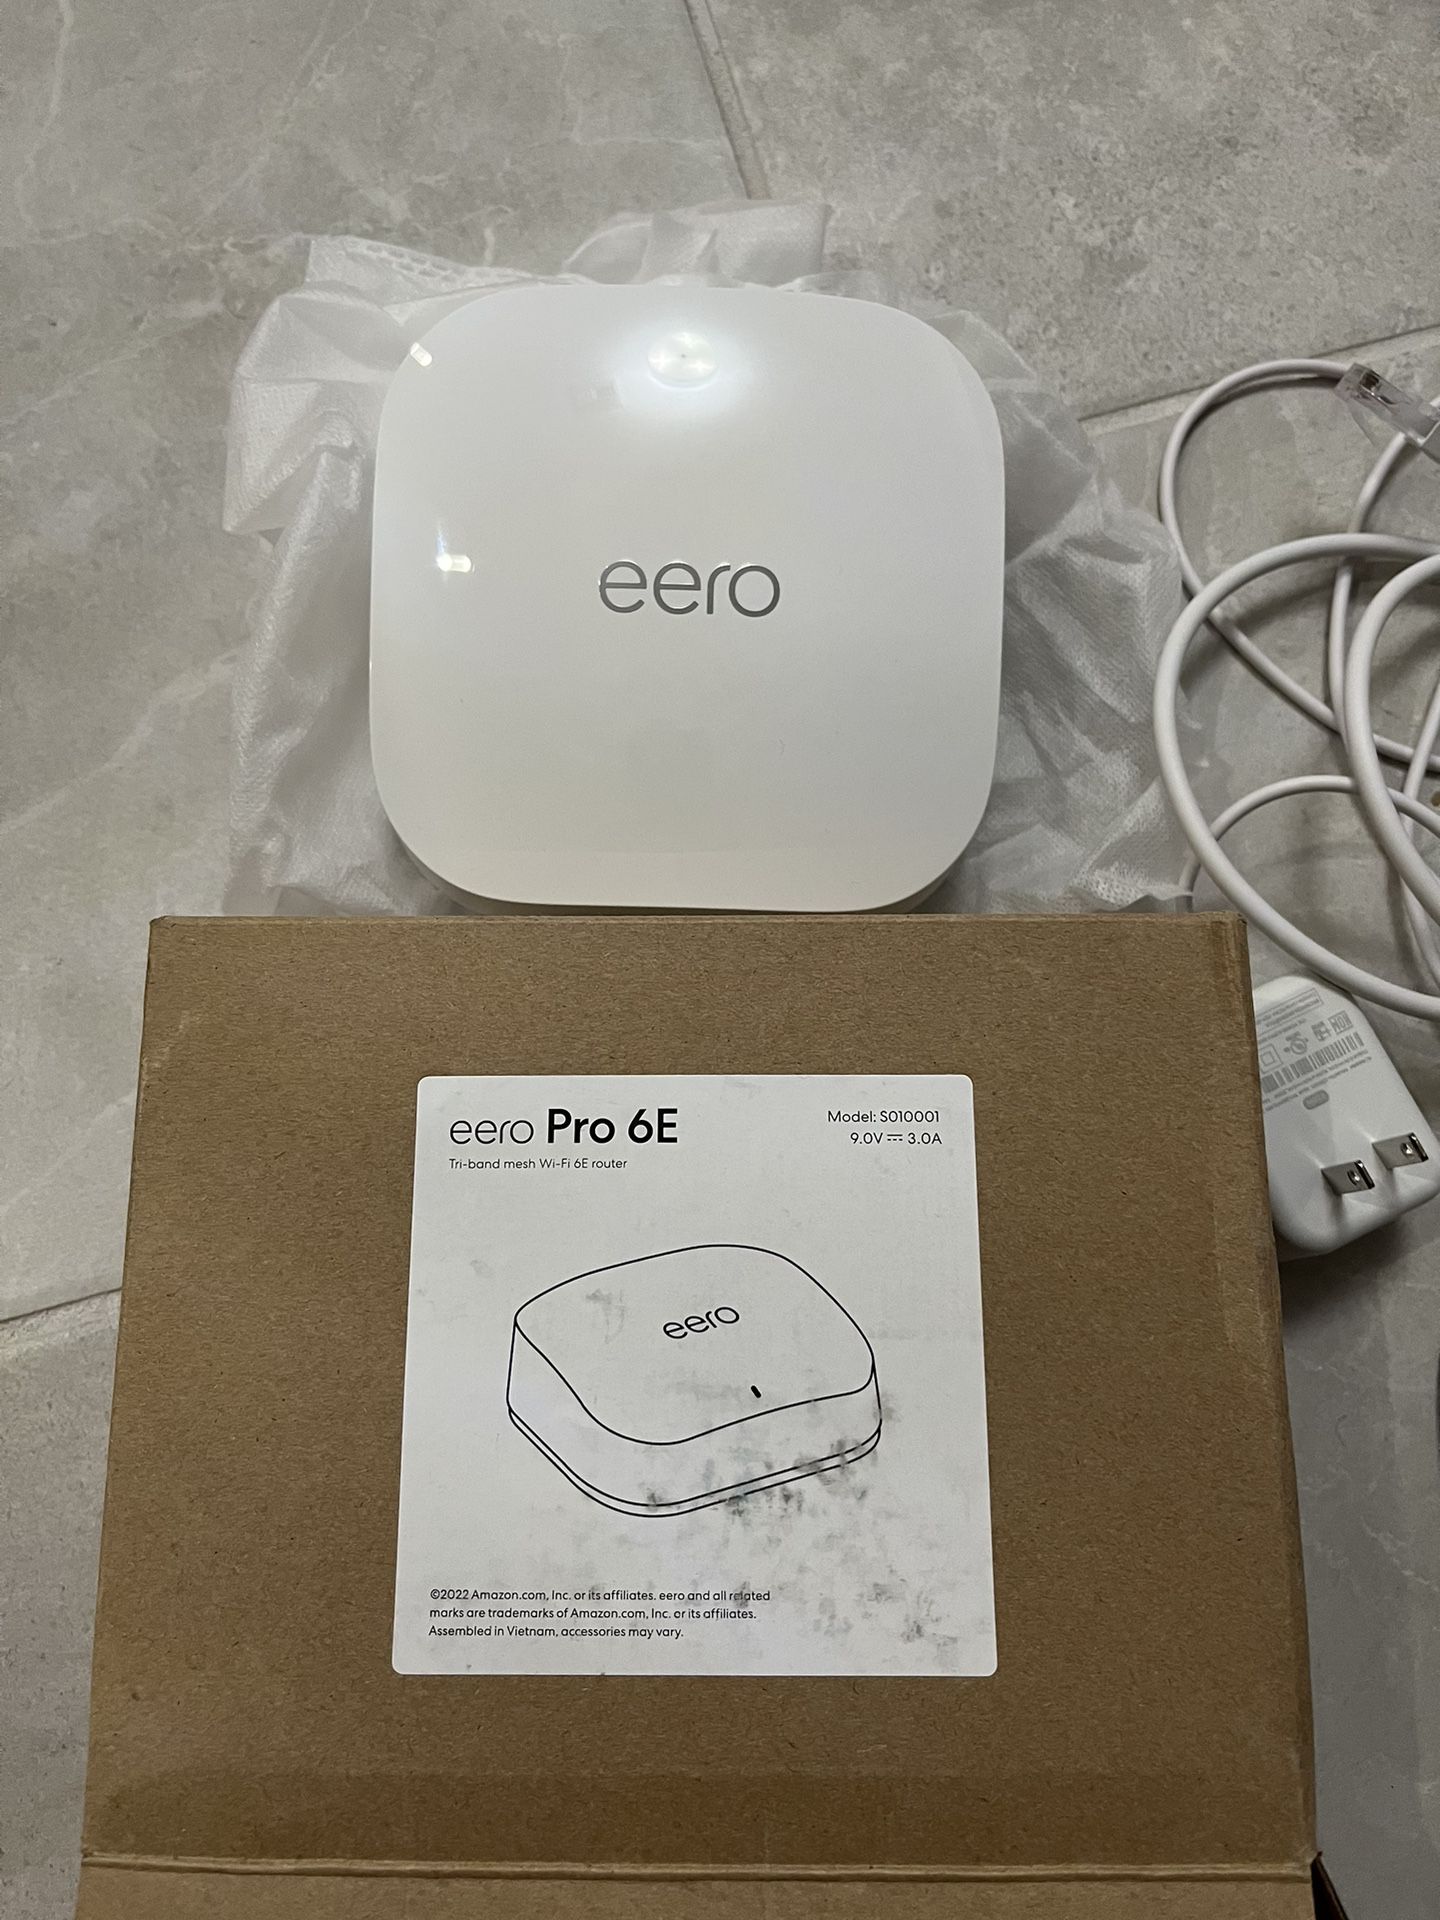 Eero Pro 6 Mess wifi Router